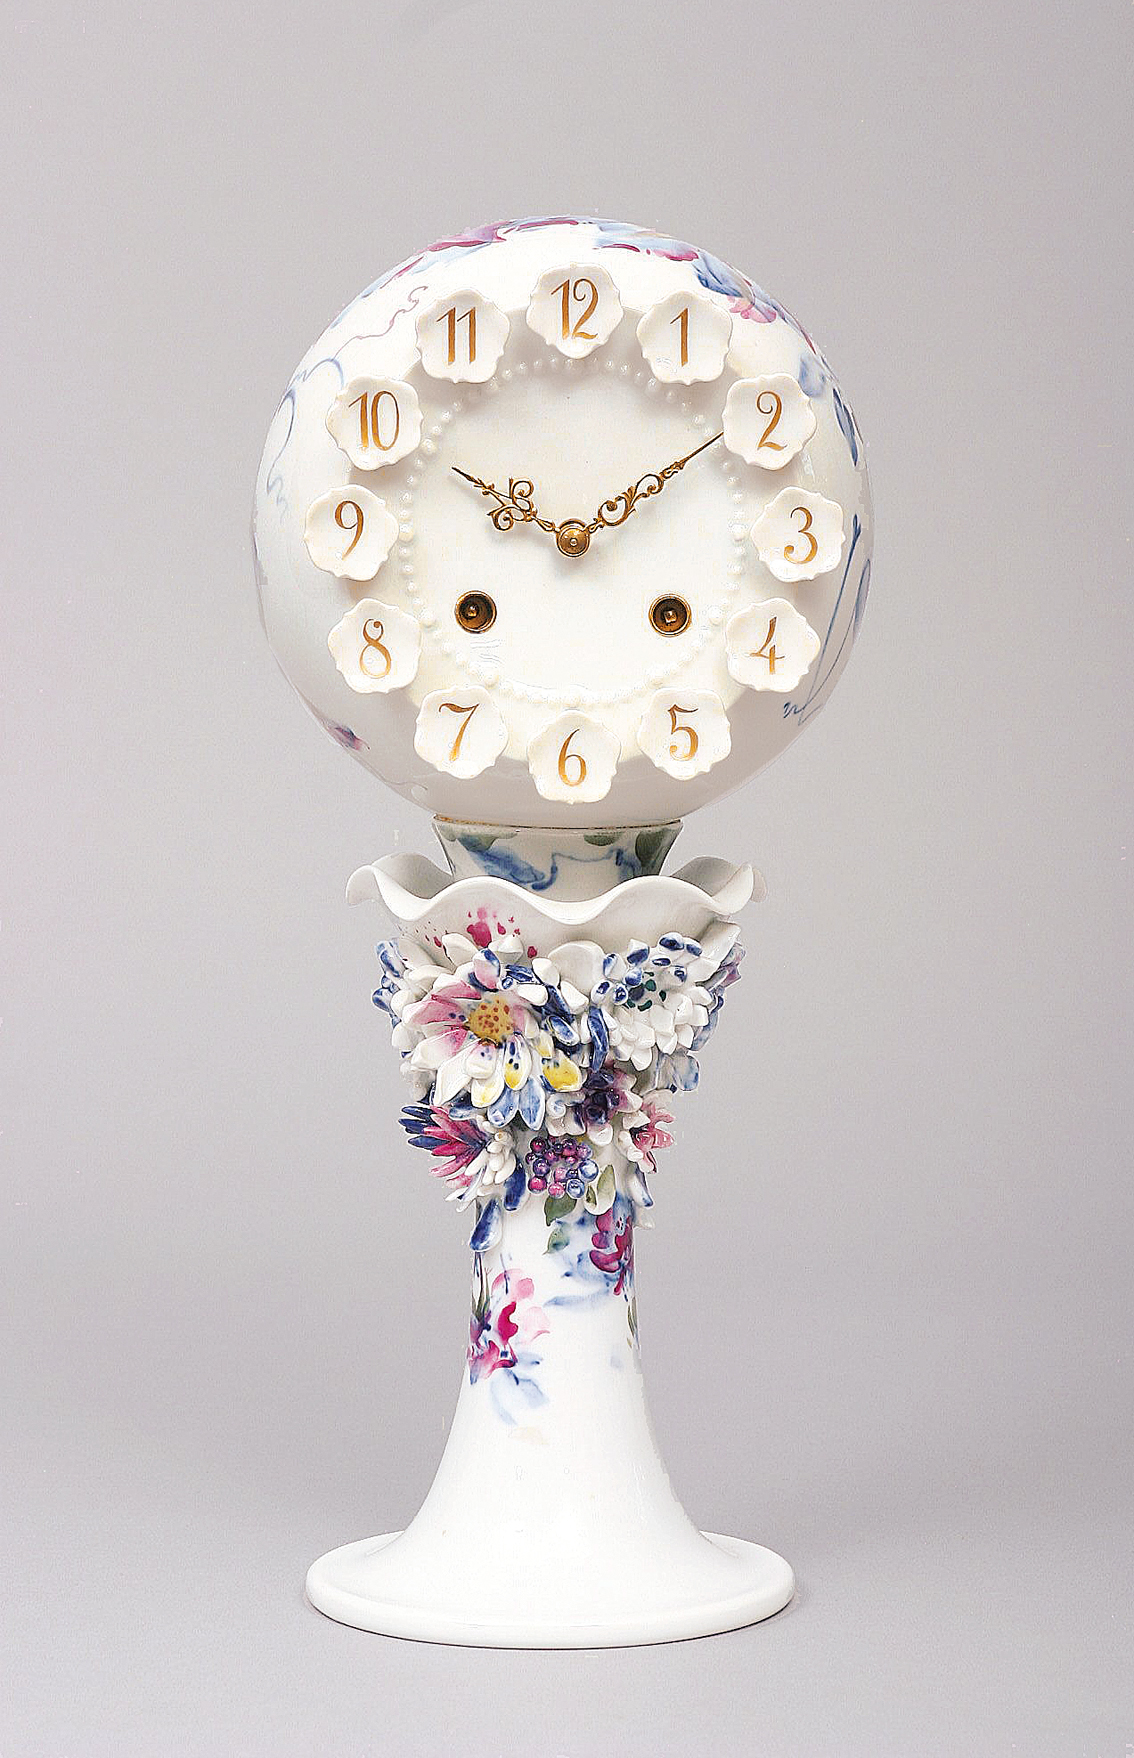 Seltene Uhr mit abstrakter Blütenmalerei